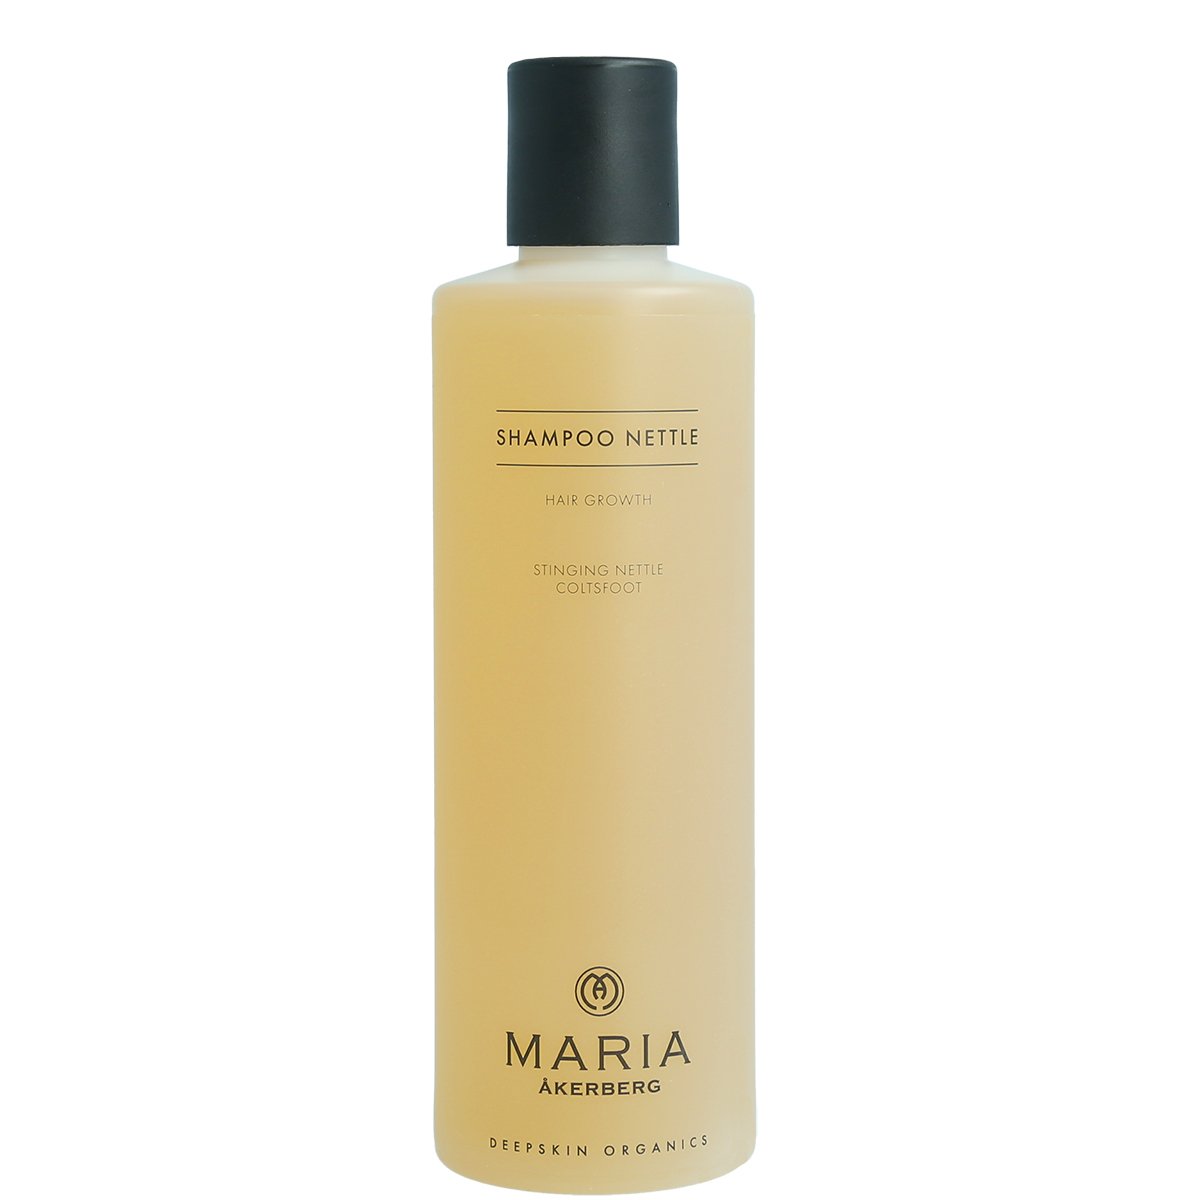 Maria Åkerberg Shampoo Nettle 250 ml